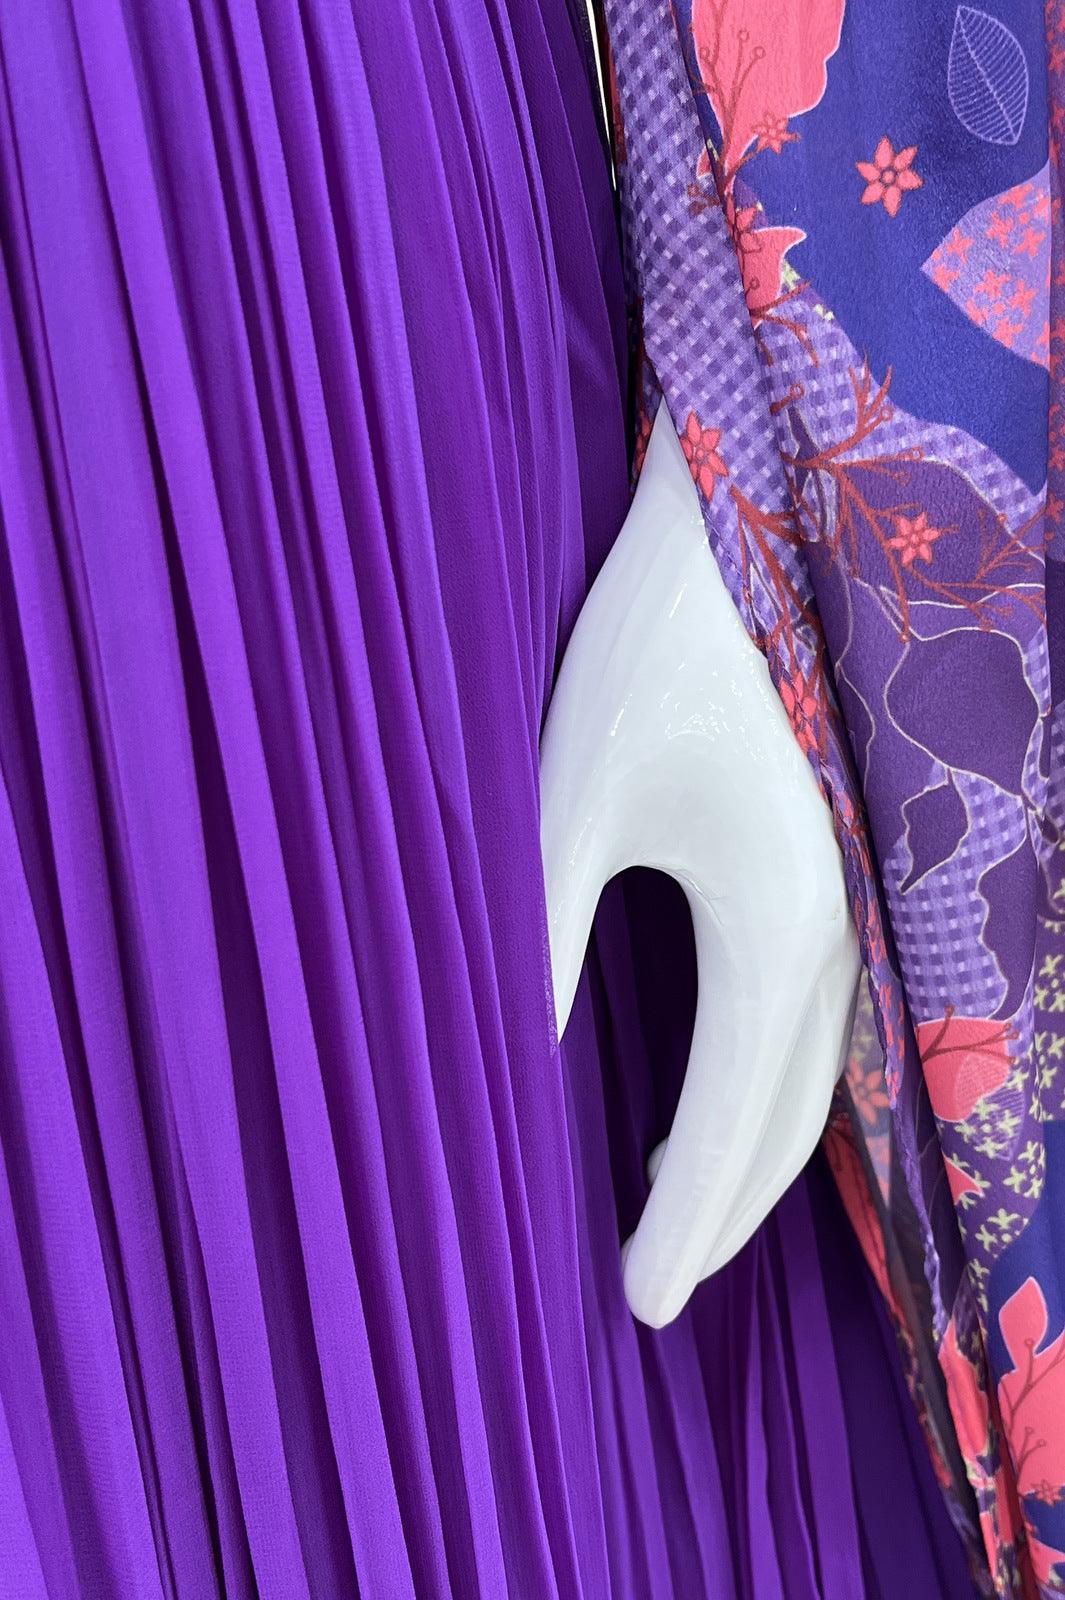 Violet Multicolor Printed, Mirror, Beads and Pearl work Floor Length Anarkali Suit - Seasons Chennai